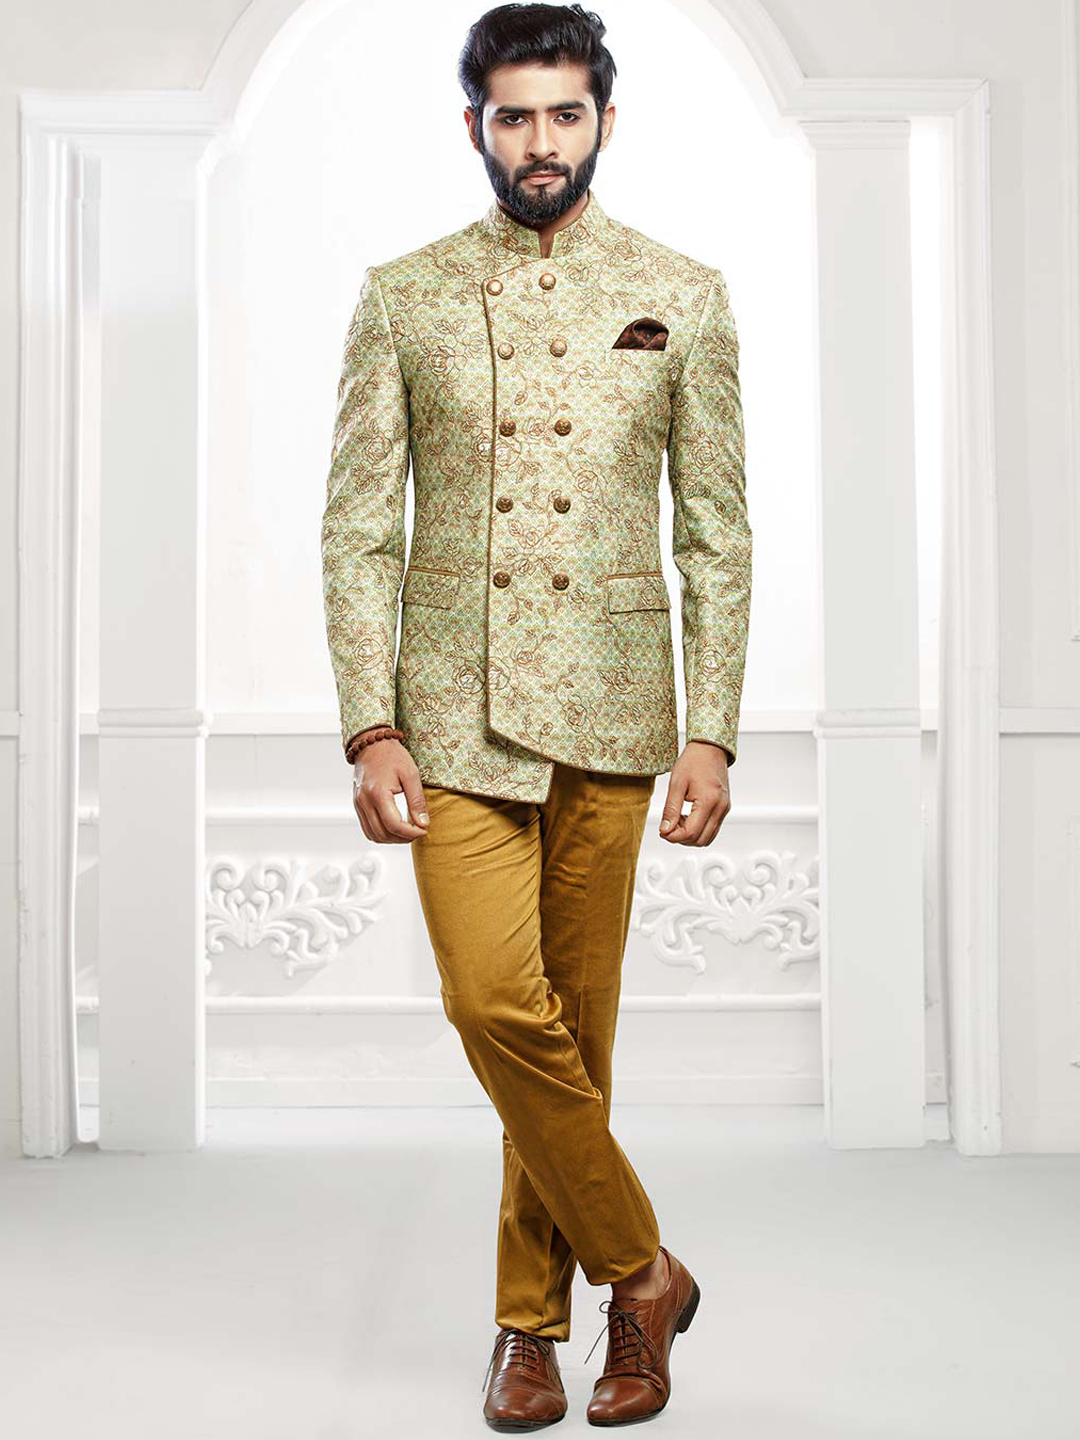 jodhpuri suit for groom